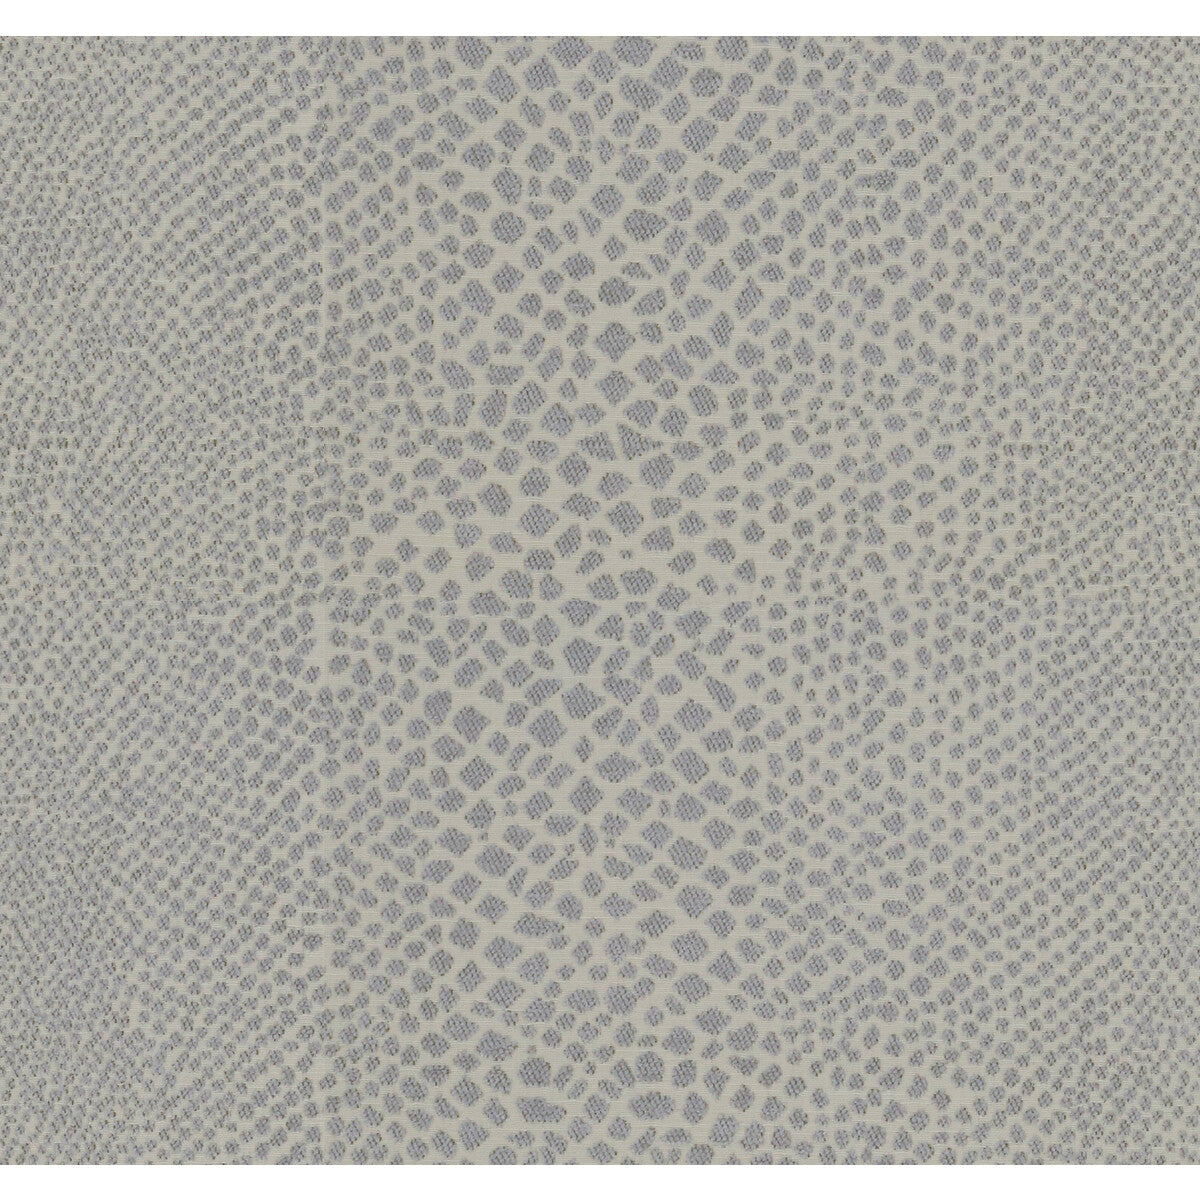 Kravet Smart fabric in 34321-1611 color - pattern 34321.1611.0 - by Kravet Smart